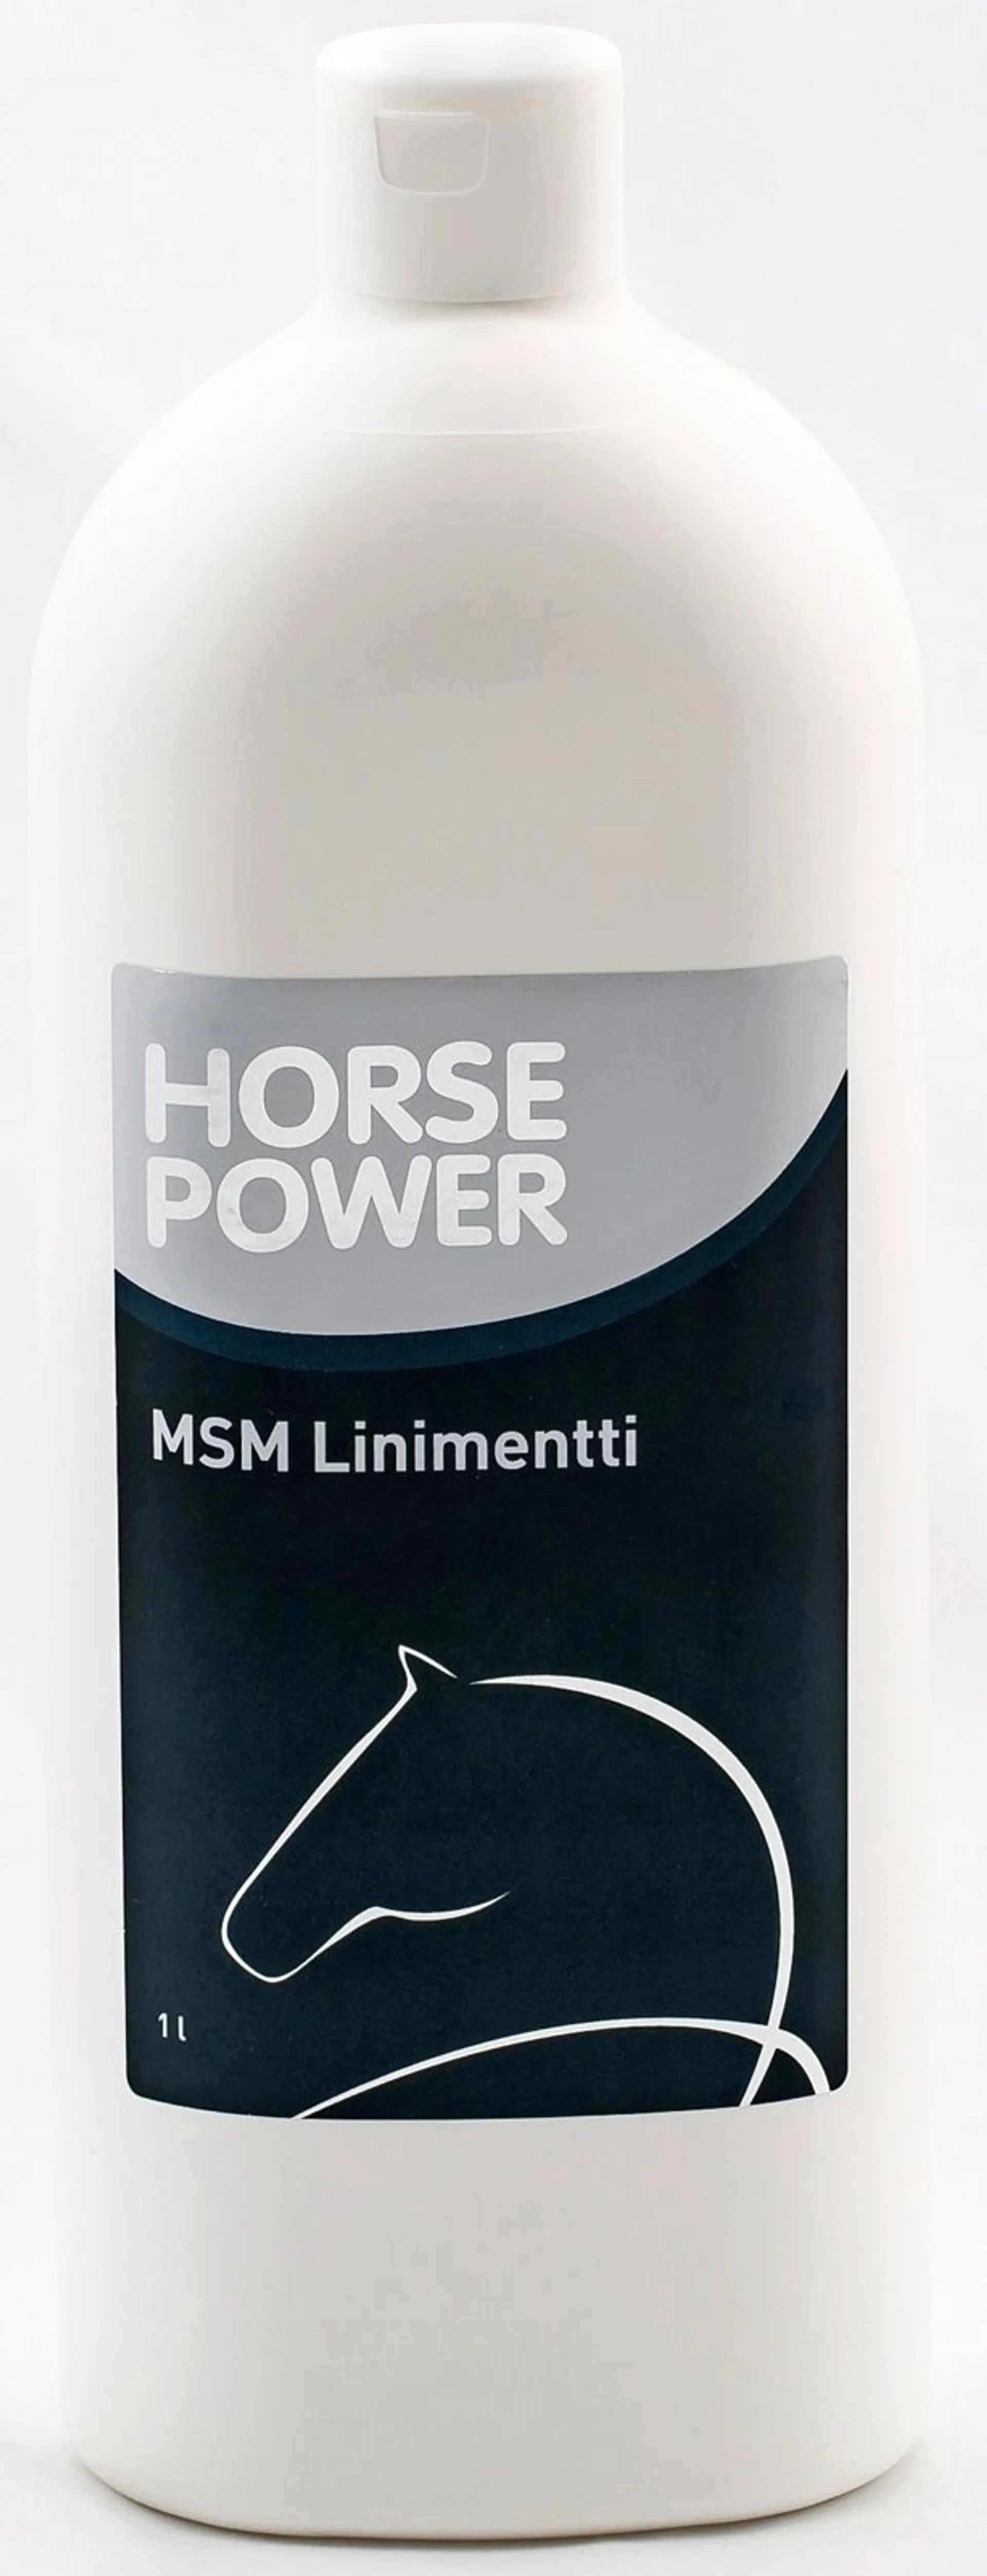 Horse Power Msm linimentti 1 l